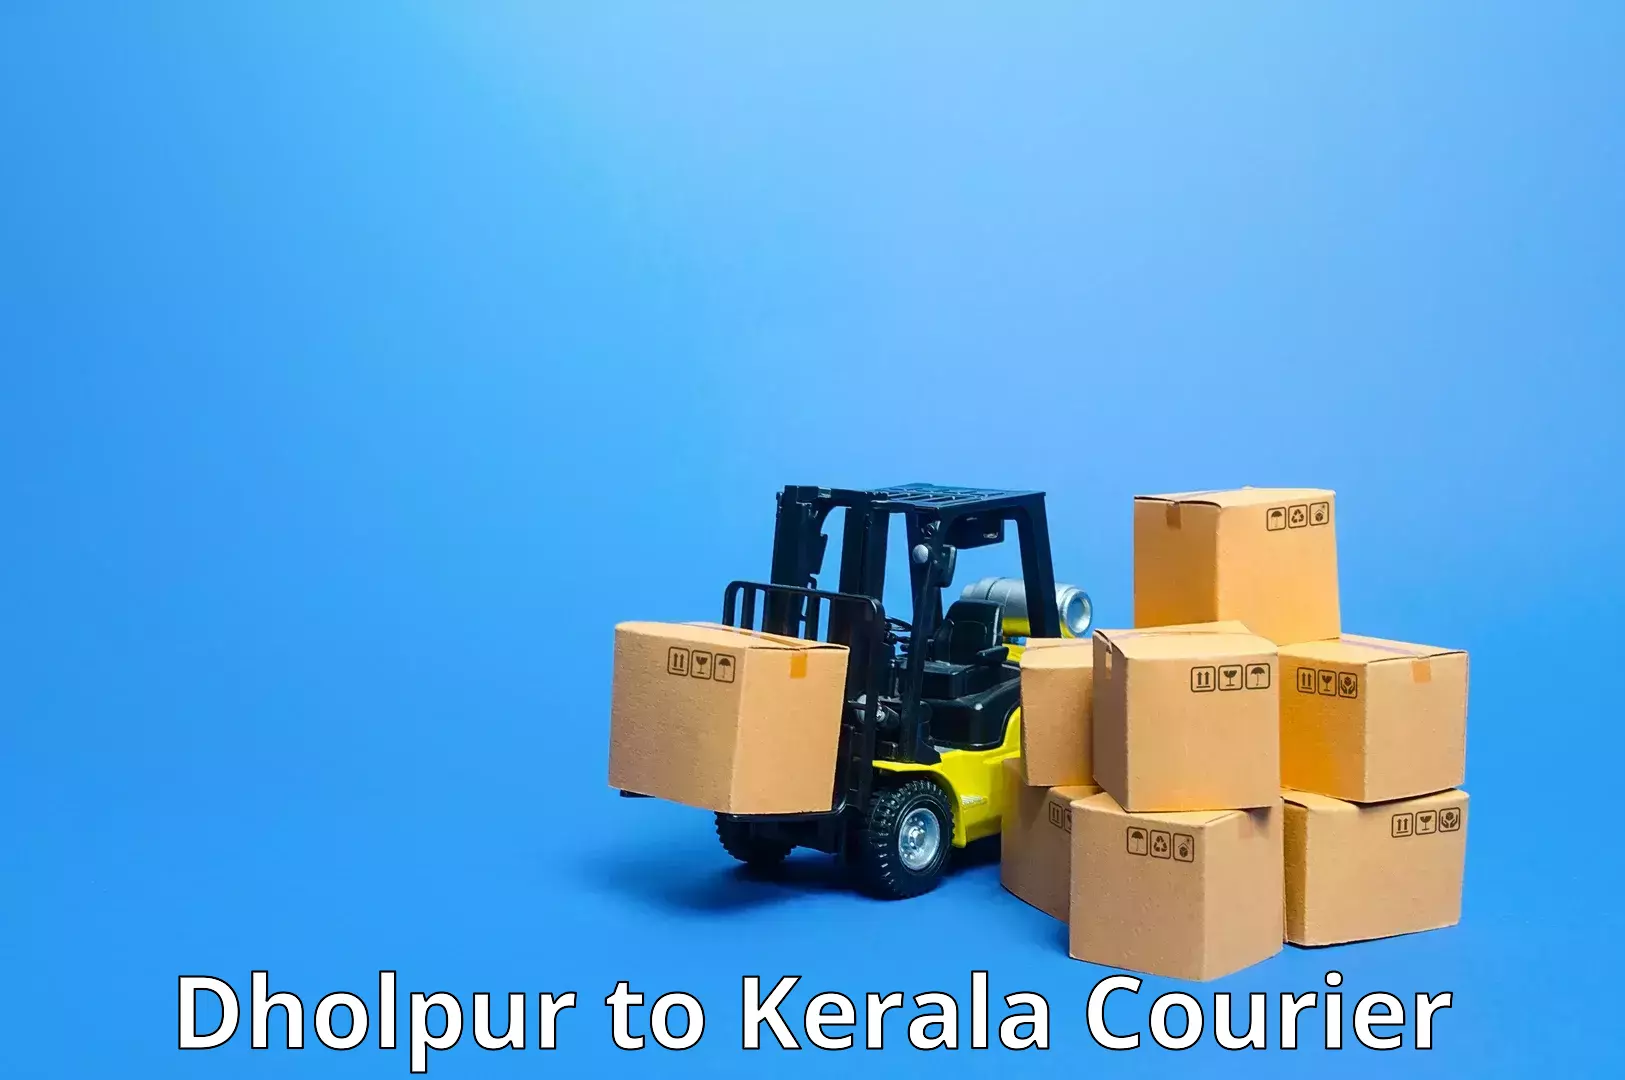 Express logistics service Dholpur to Kerala